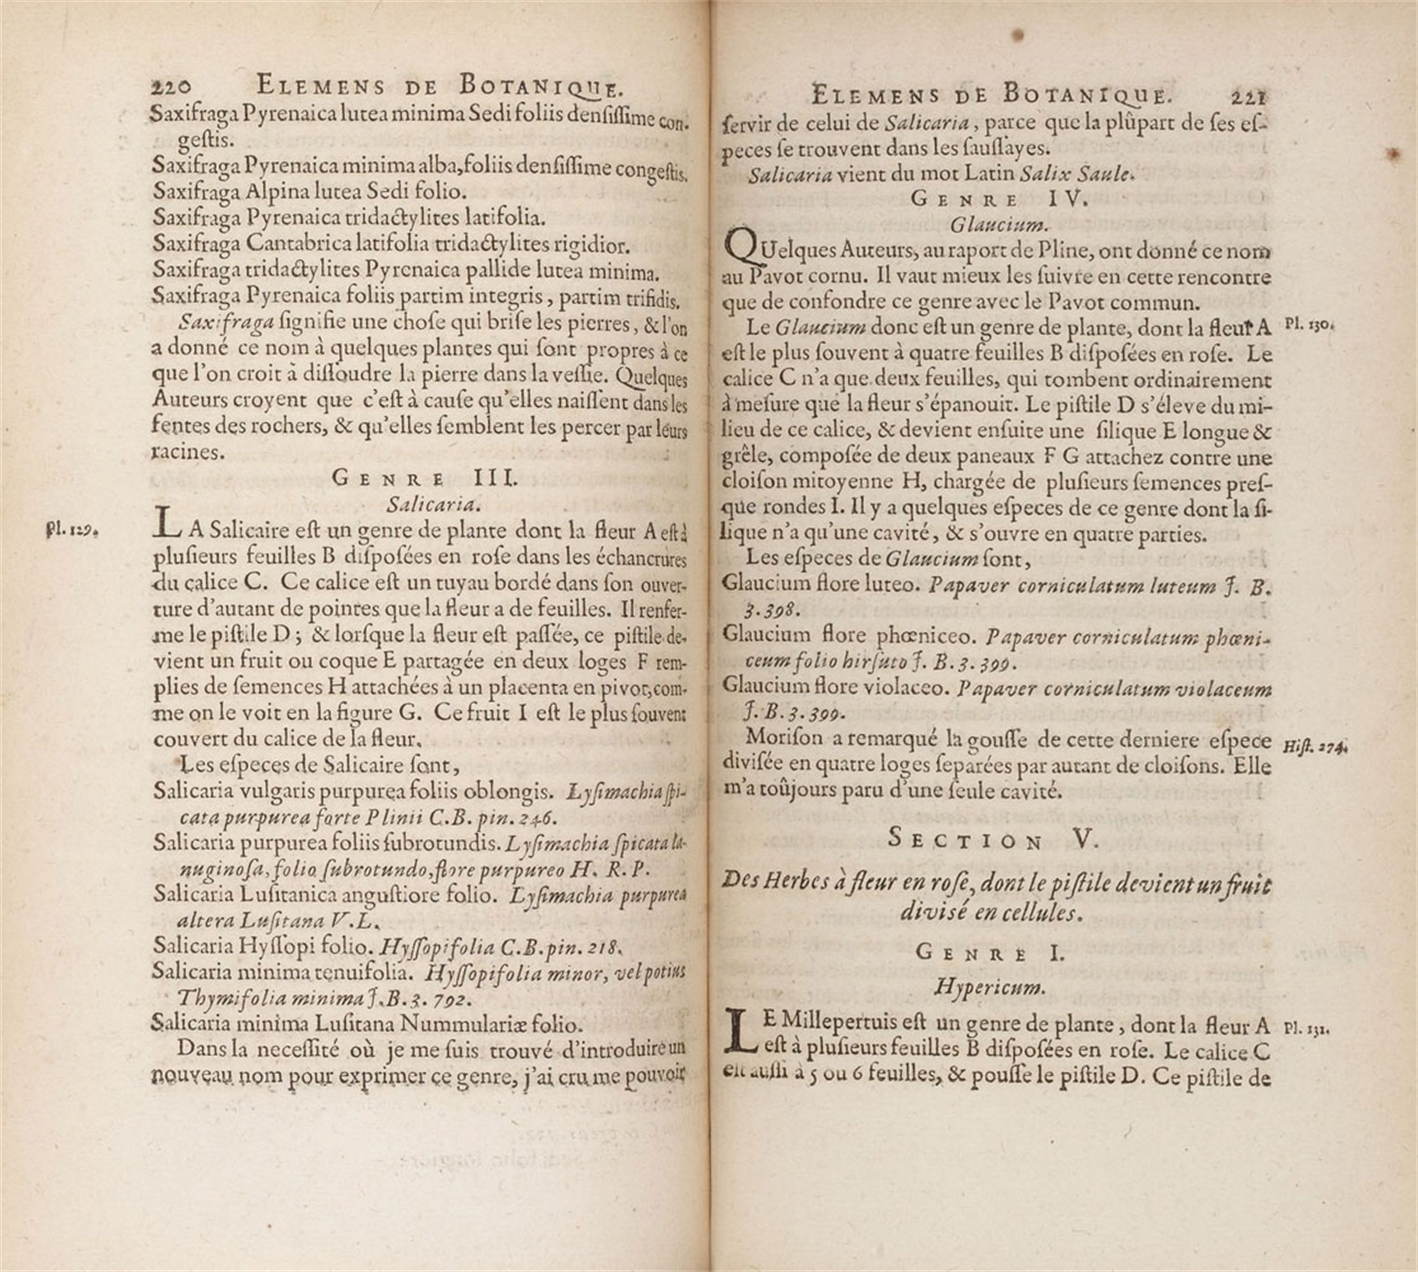 Страницы из книги Турнефора «Elémens de botanique, ou Méthode pour connoître les Plantes», посвящённые роду Salicaria